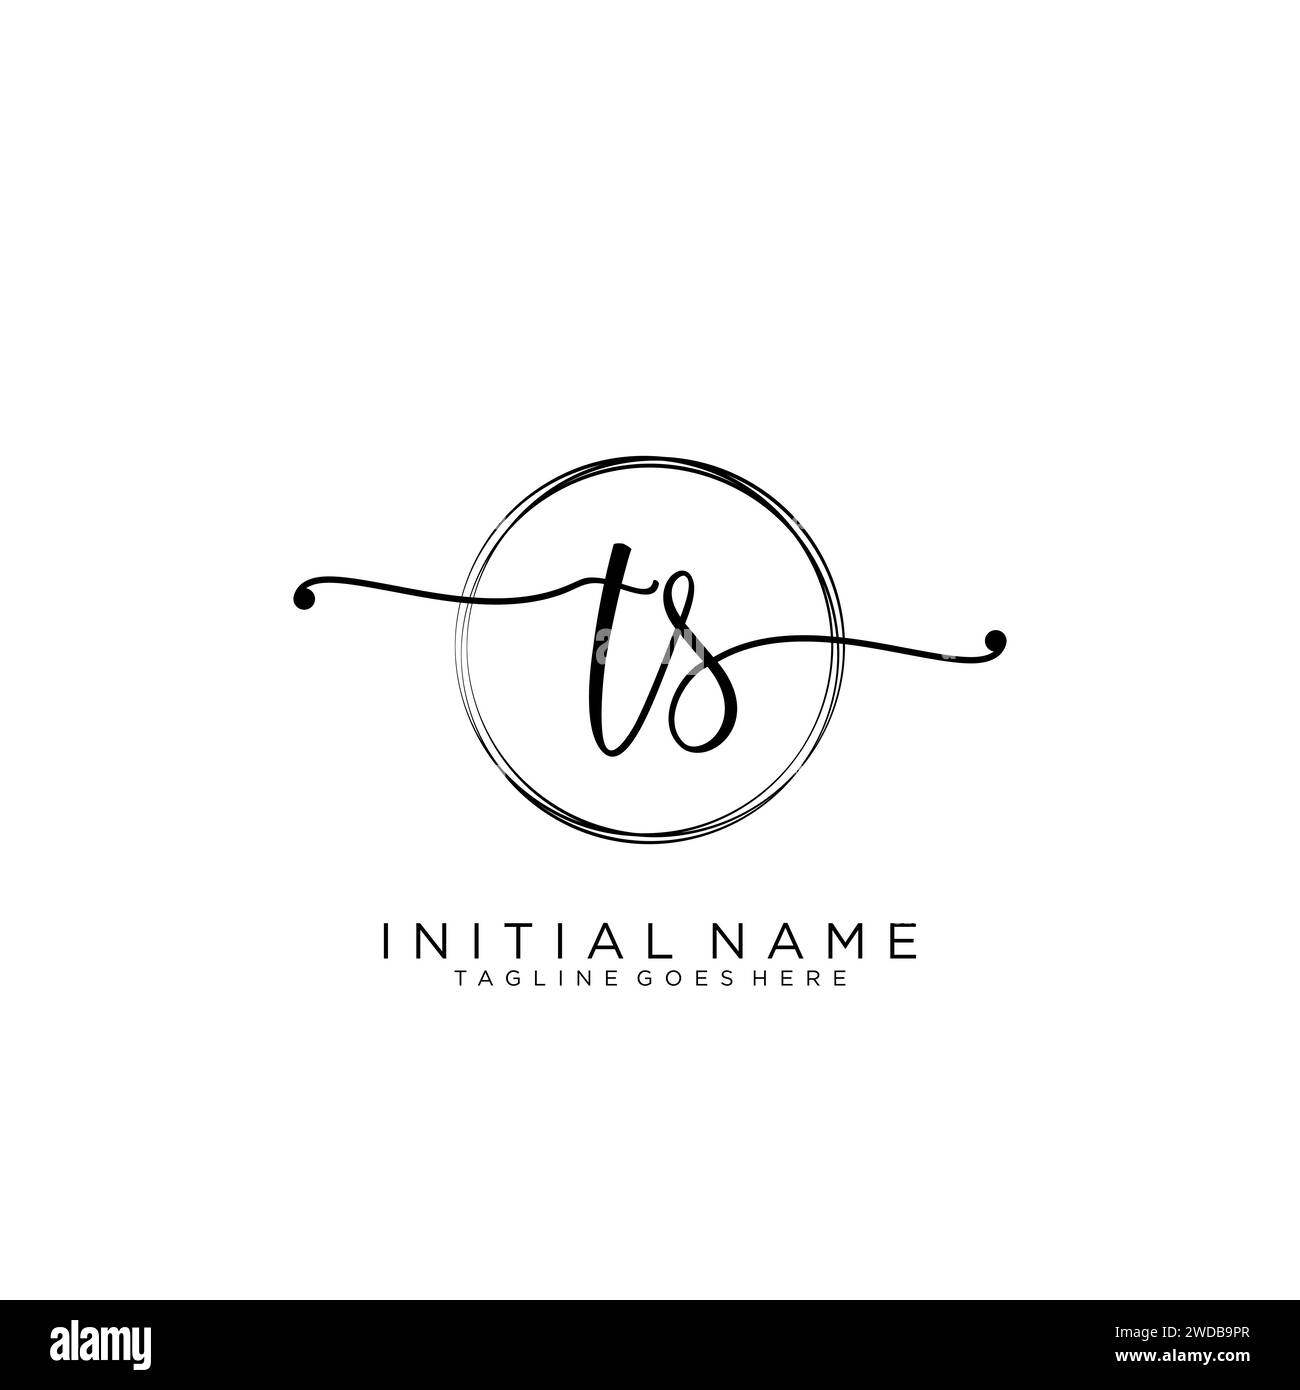 TS Initial handwriting logo with circle Stock Vector